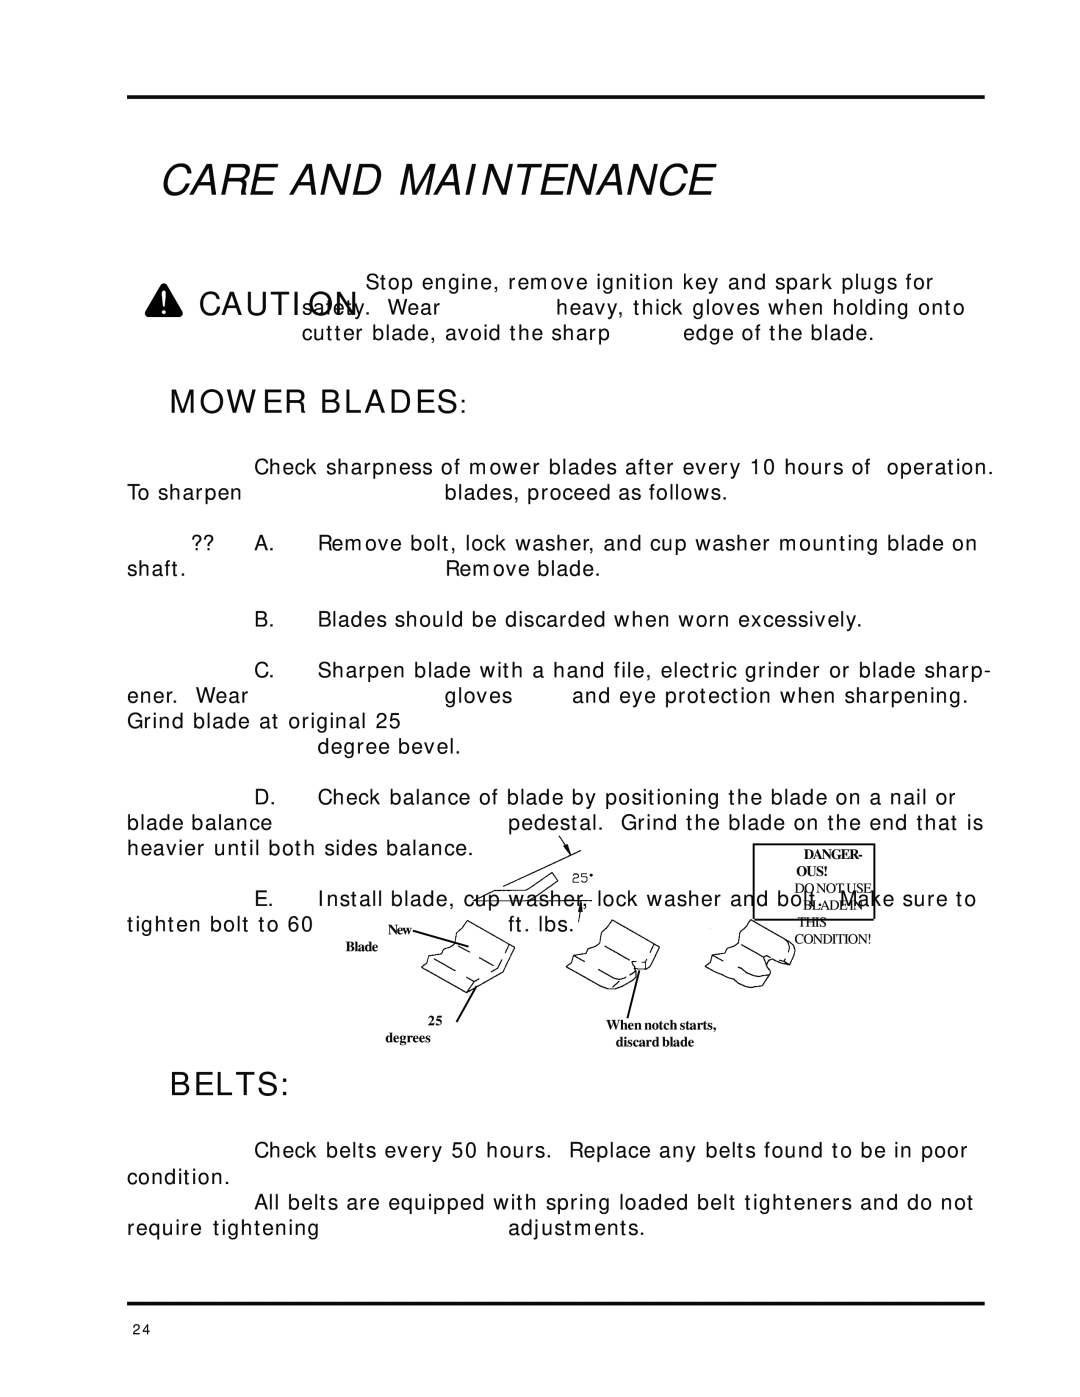 Dixon 8000 Series Mower Blades, Belts, Care And Maintenance, blade balance, heavier until both sides balance, ft. lbs 